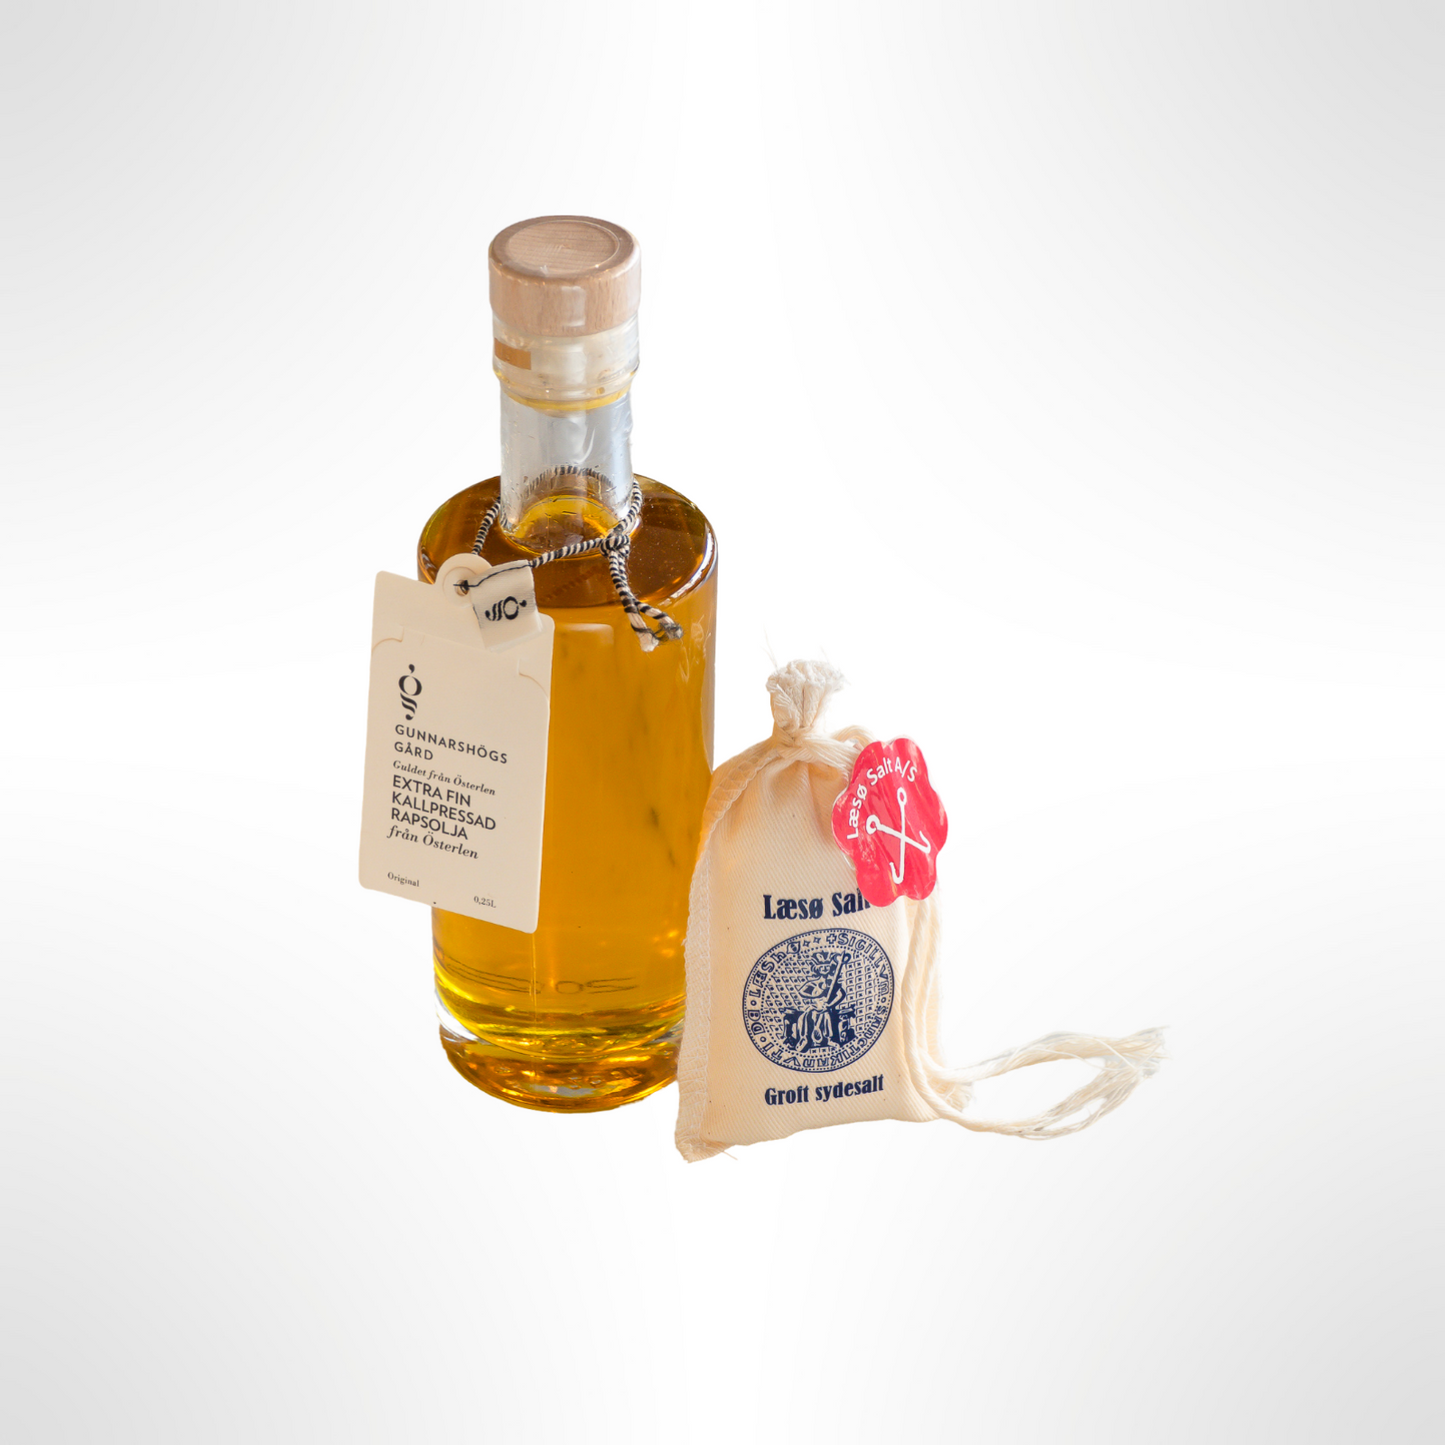 Gunnarhög's rapeseed oil and Laeso salt